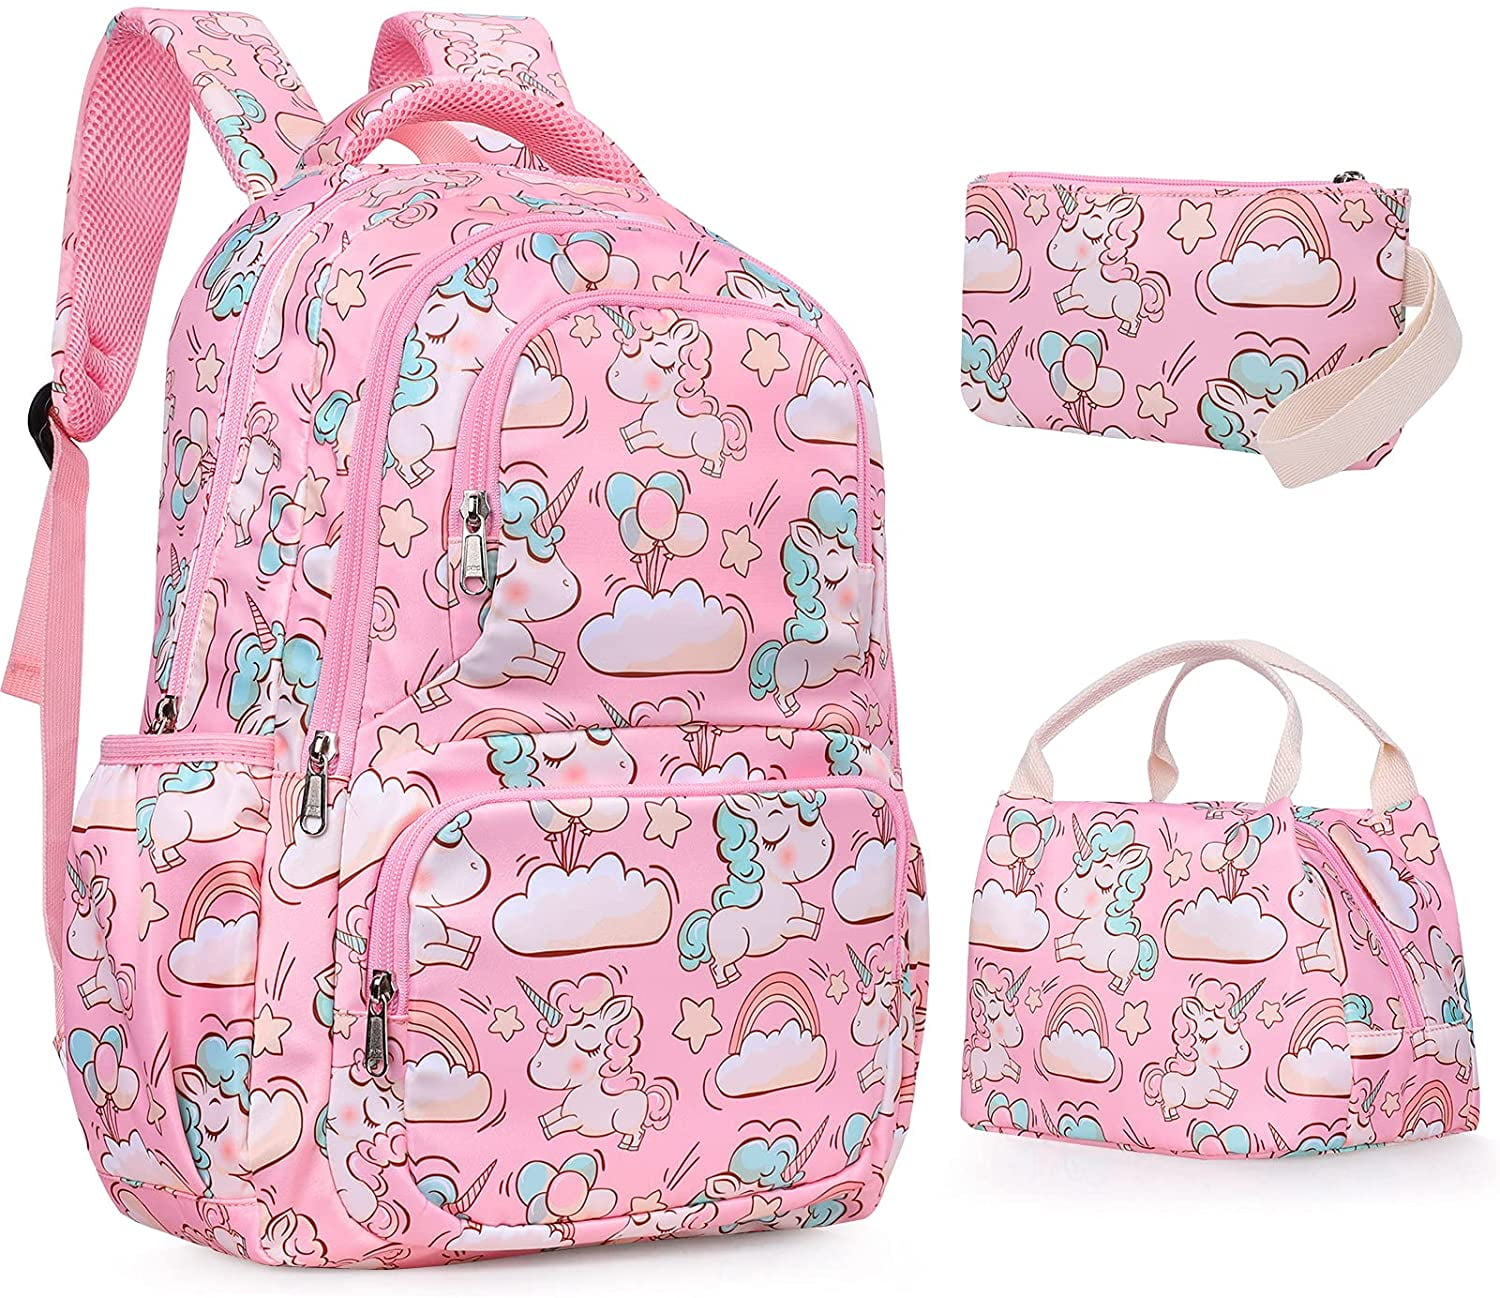 ColourLife Book bag Floral Unicorn Laptop Backpack Casual Daypack School Bag